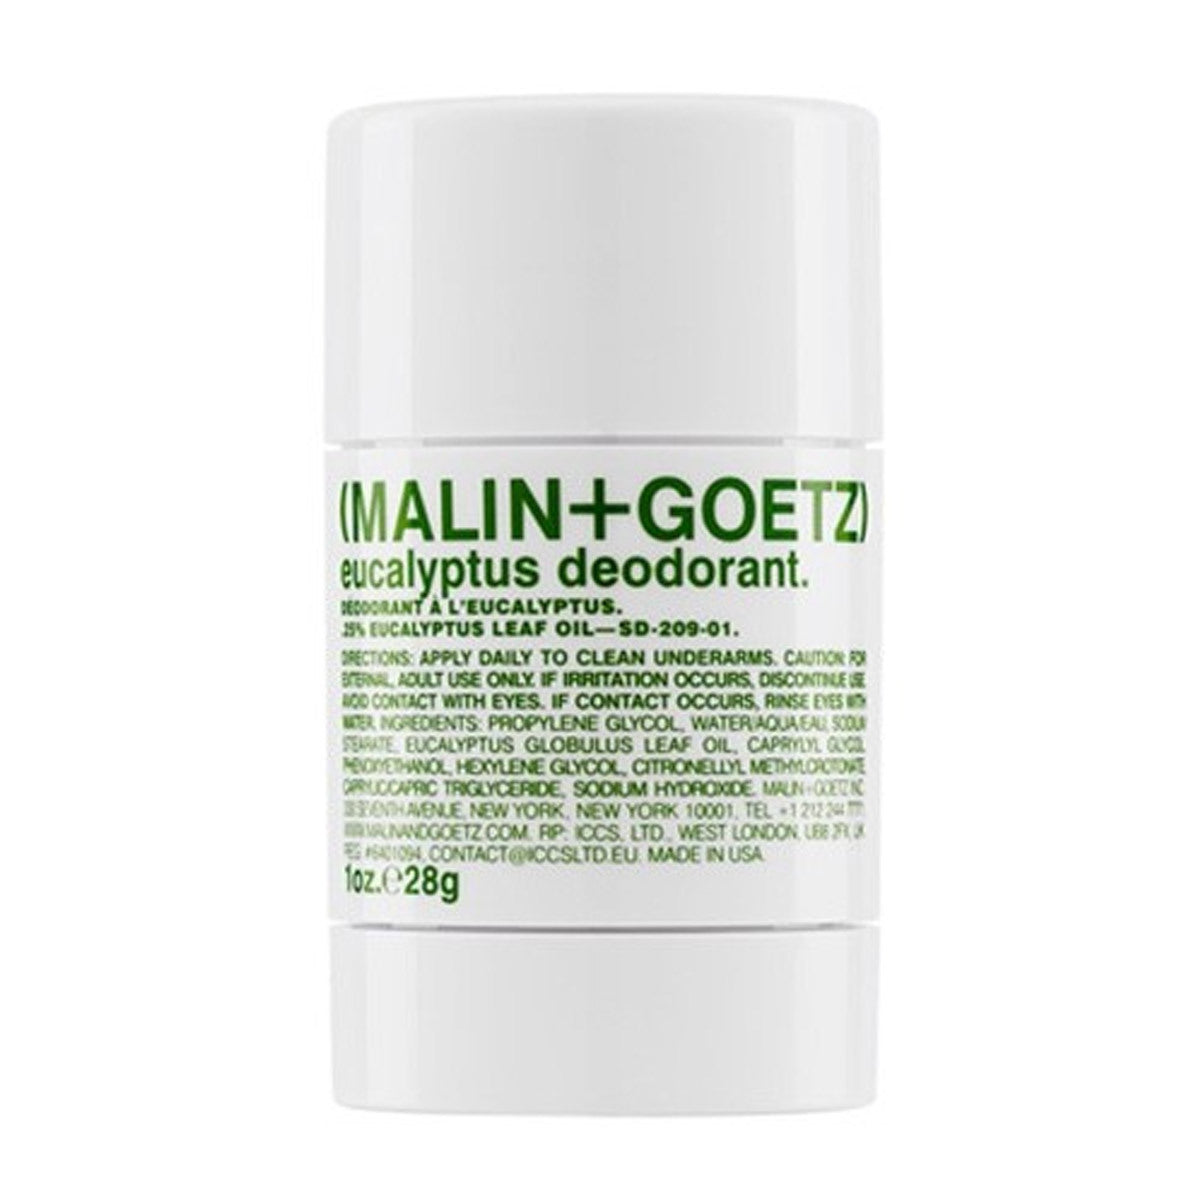 Primary image of Eucalyptus Deodorant Mini